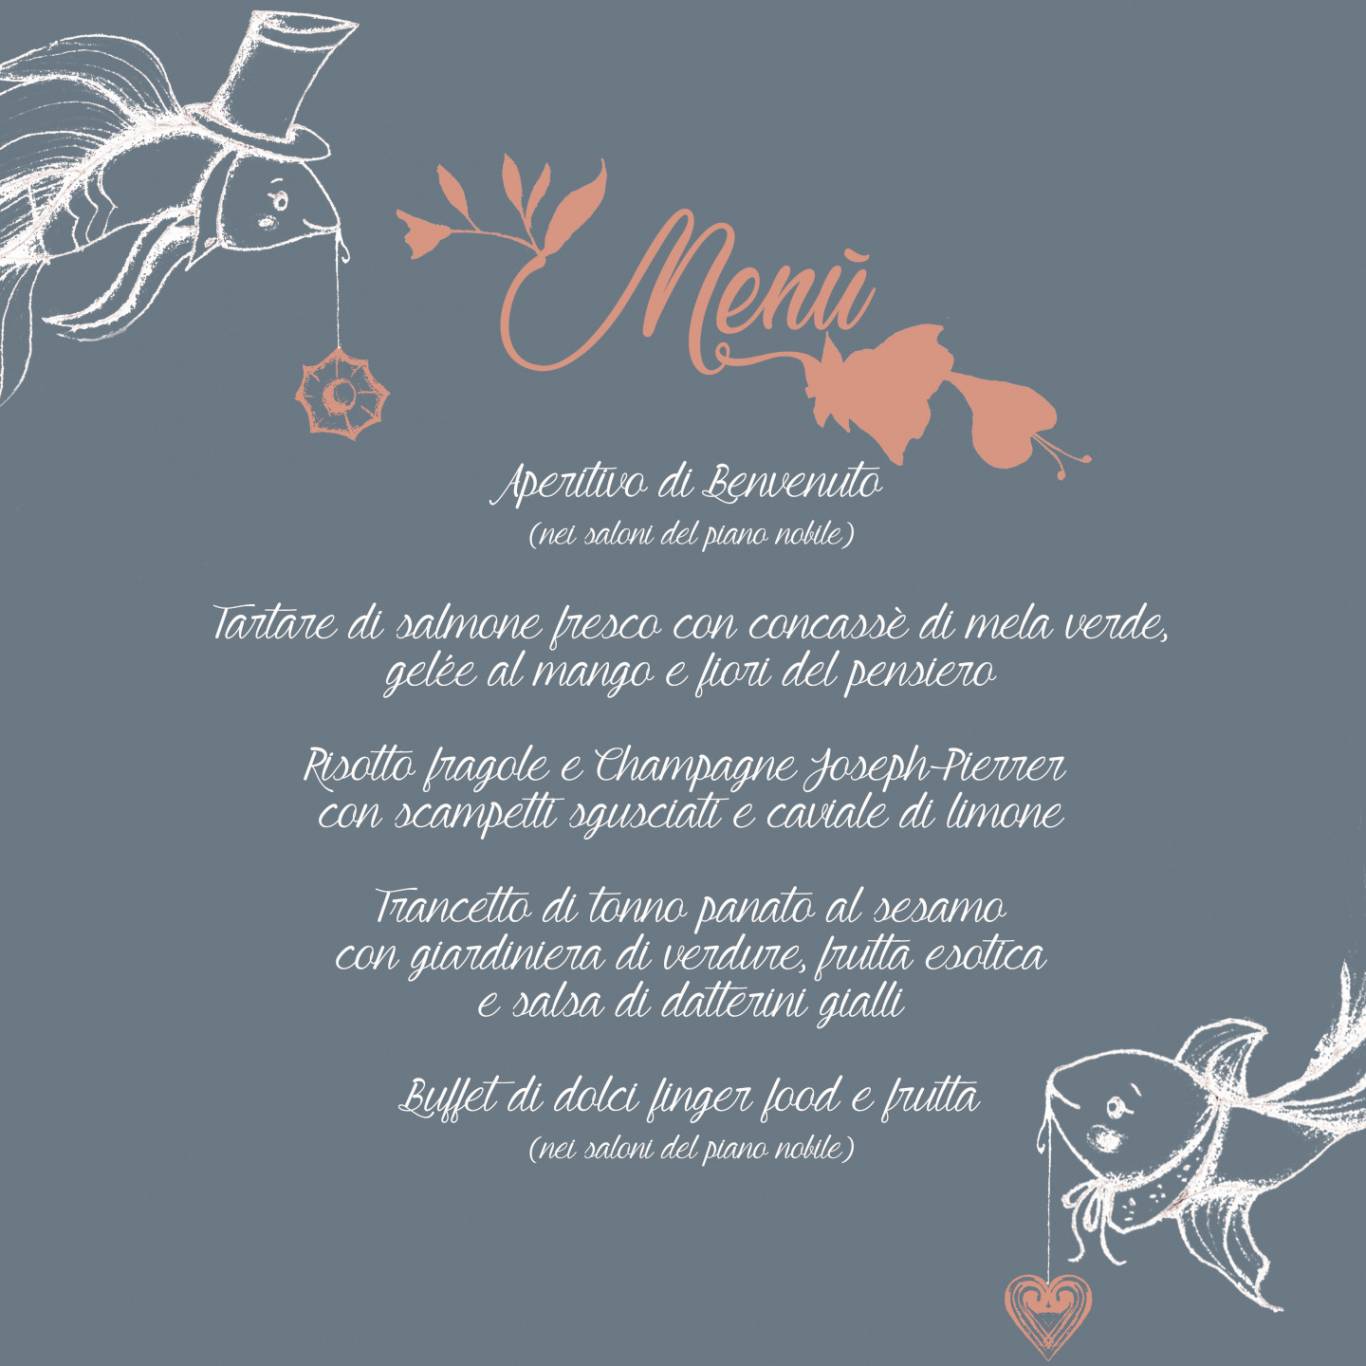 cena-san-valentino-grazioli-art-bistrot-grottaferrata-menu